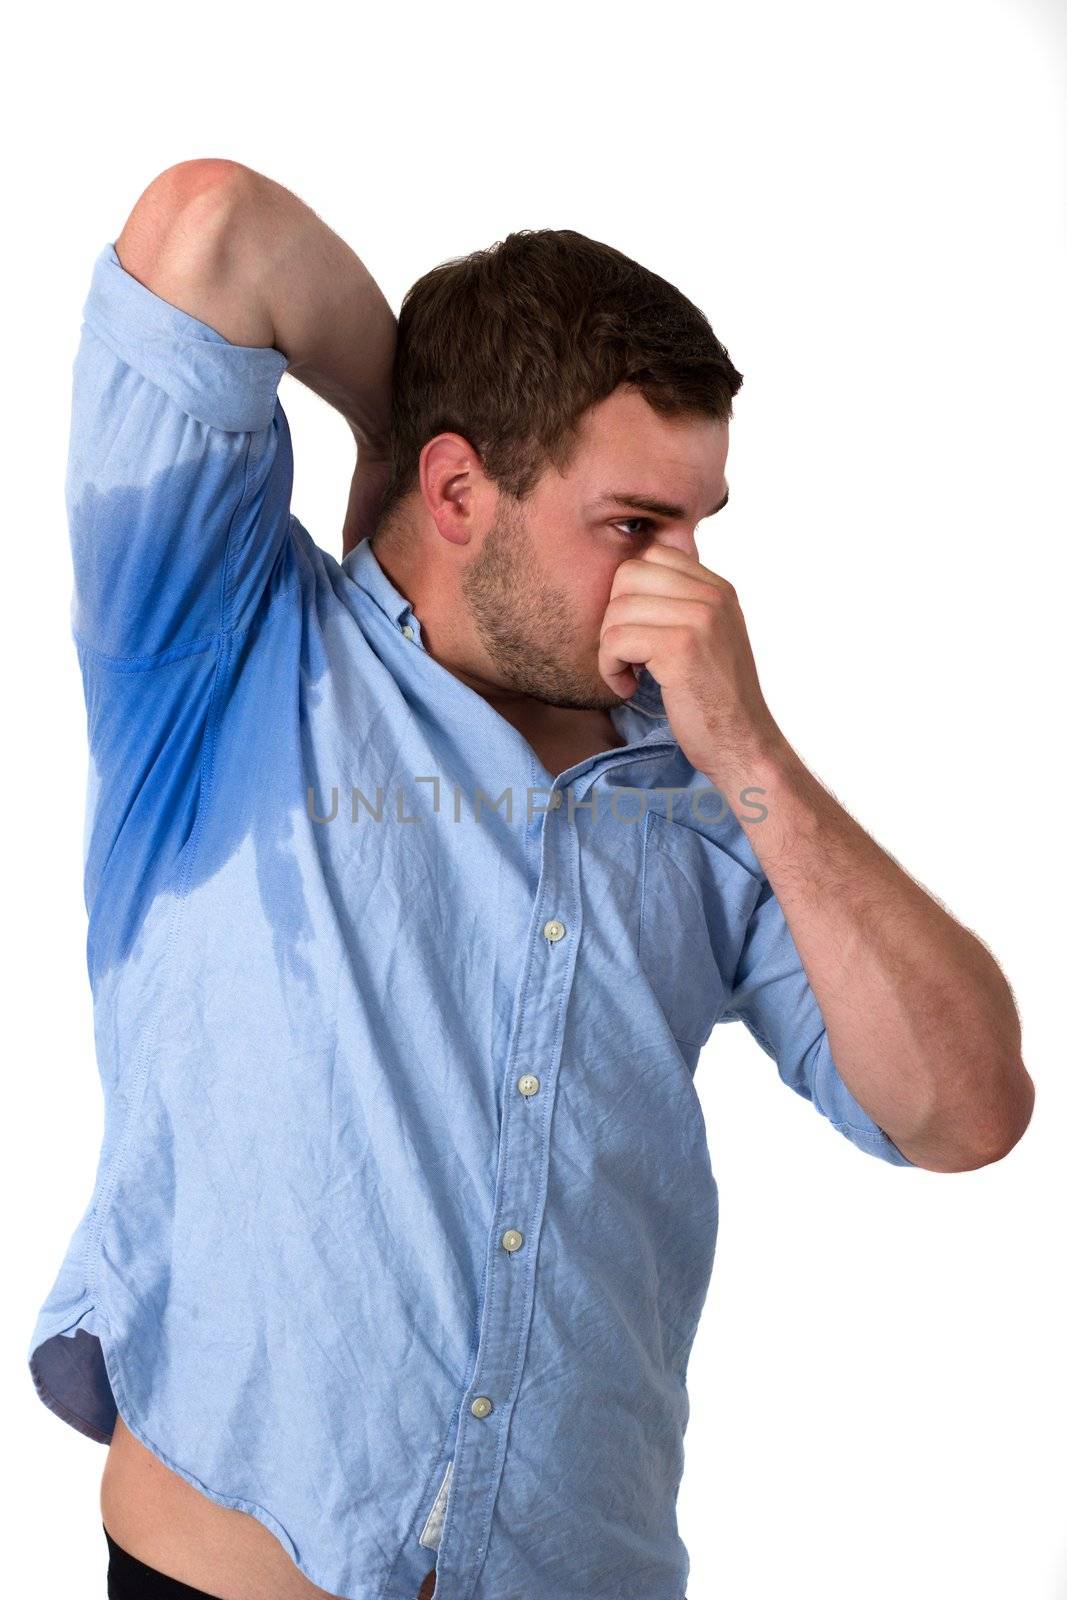 Man sweating very badly under armpit by dwaschnig_photo